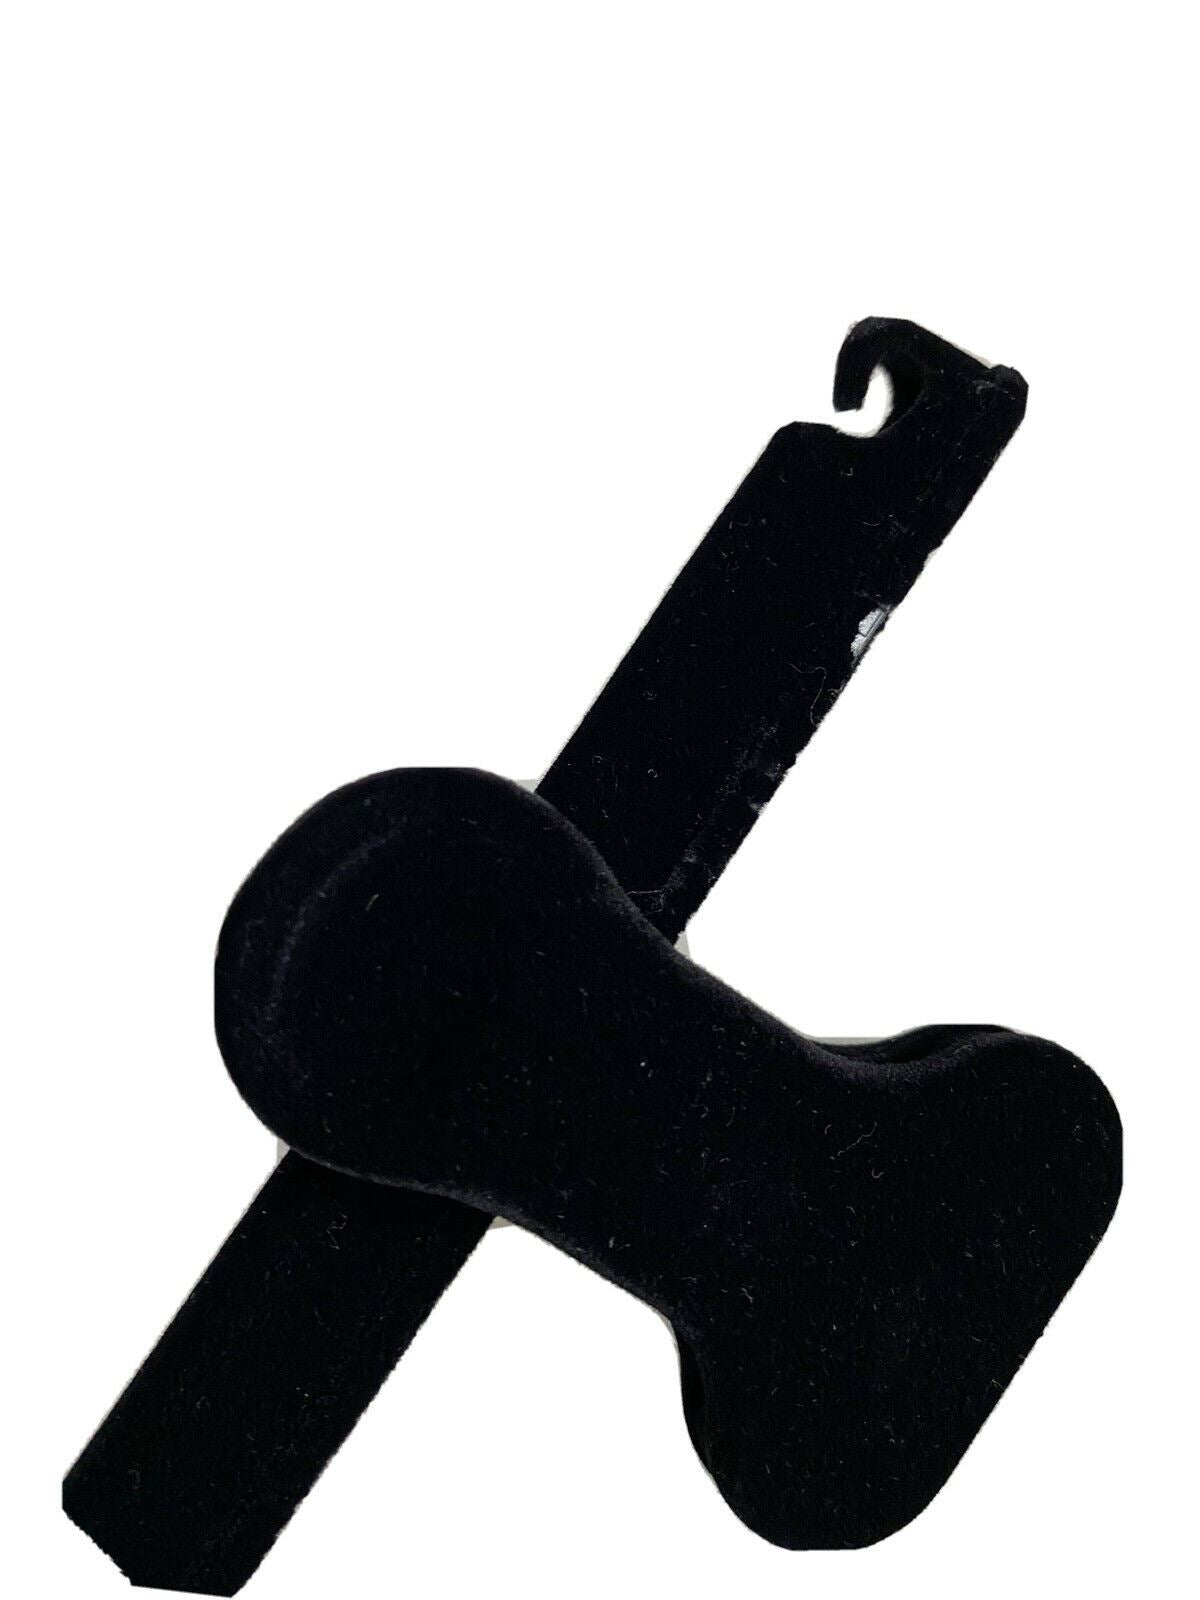 VERSACE Black Velvet 14.5" Clip Pants Hangers with Silver Hardware 14.5x3.5